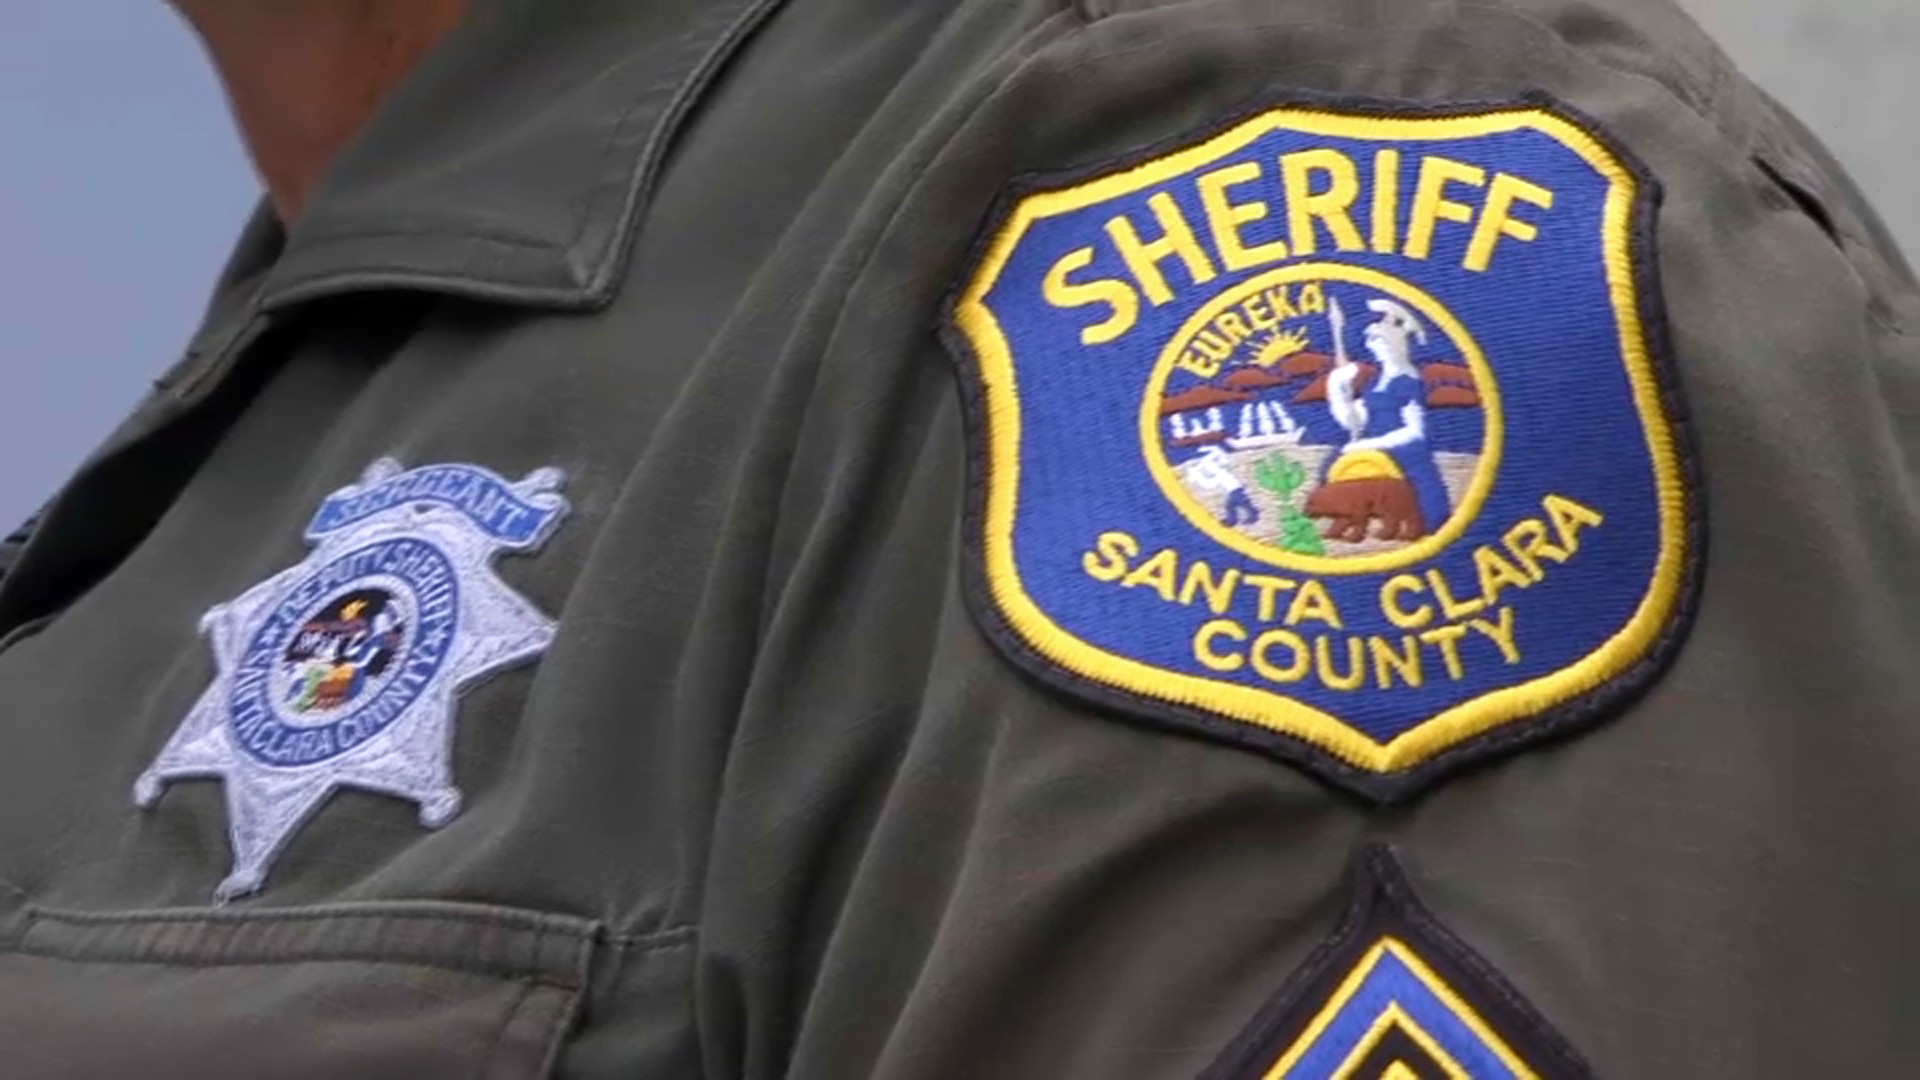 Santa Clara County California Sheriffs Department Police Patch Ca 